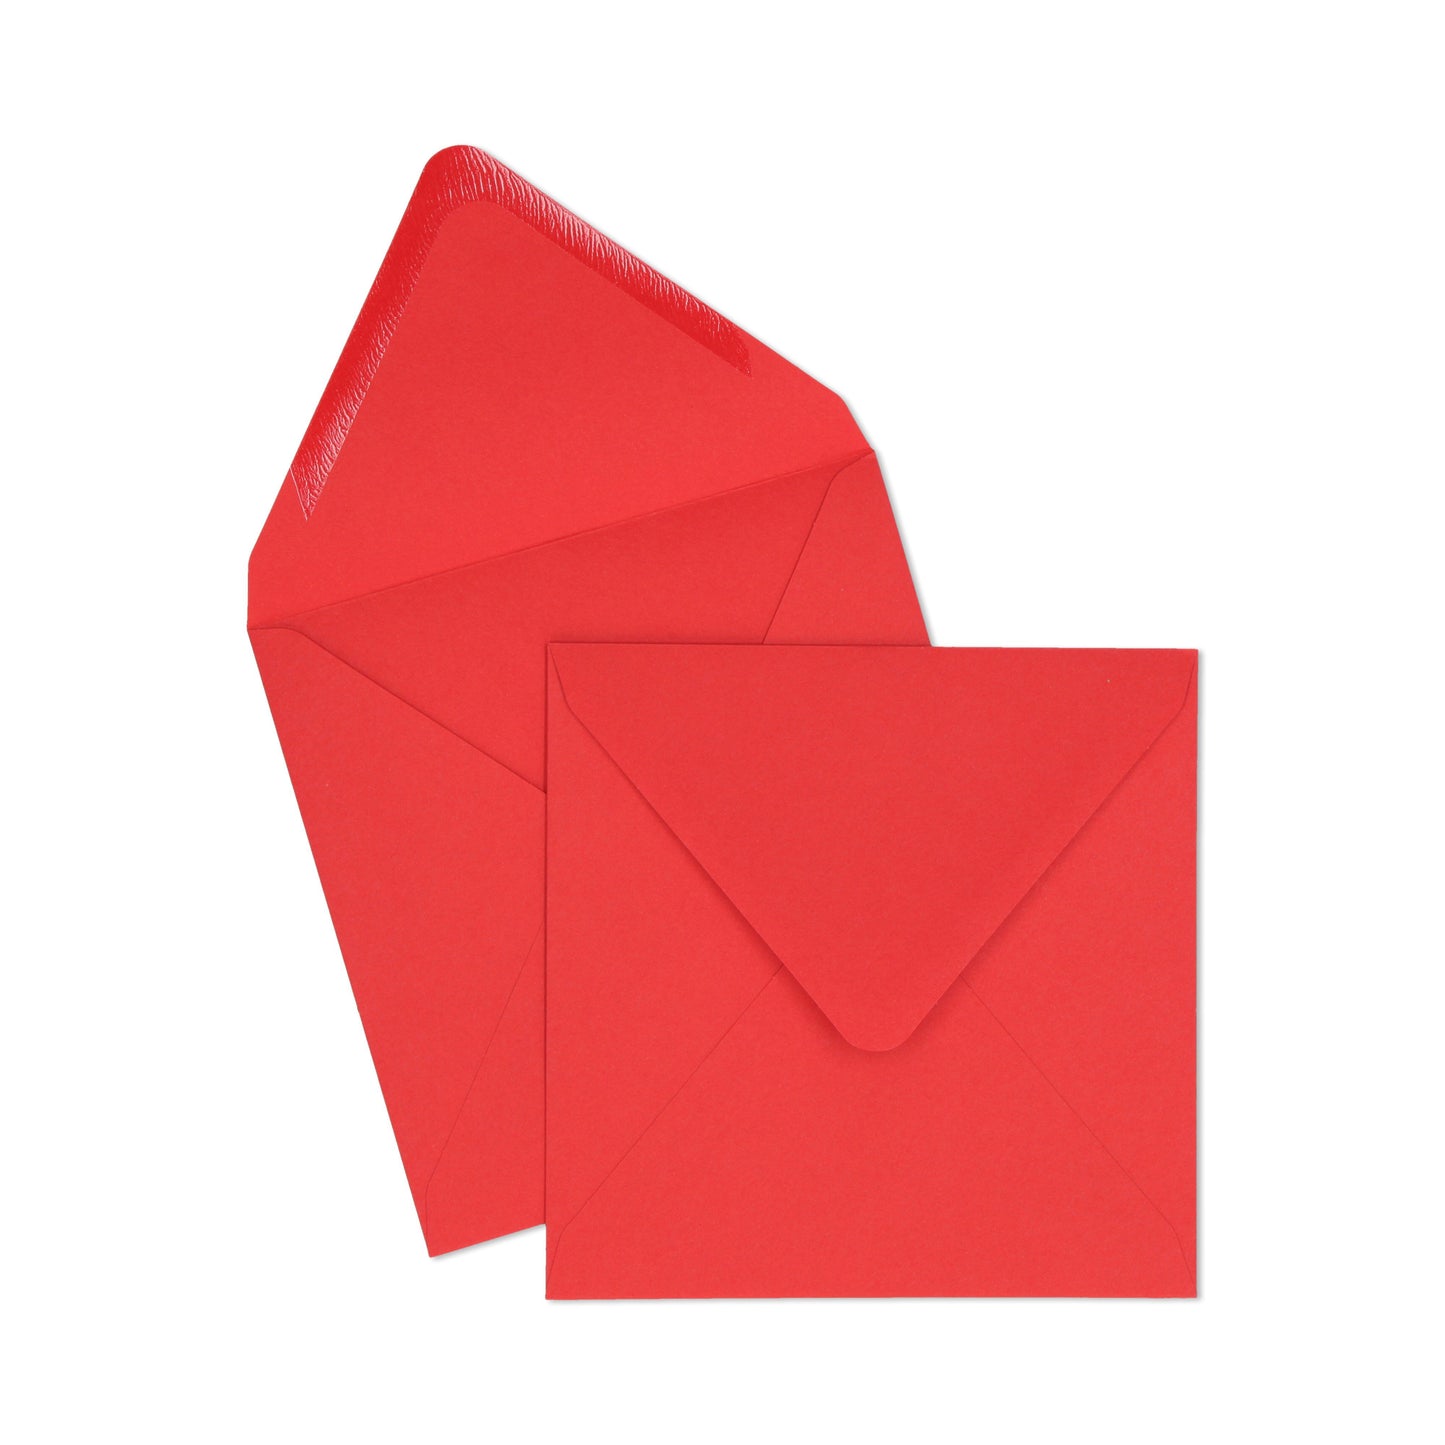 Red CD Envelope - 10 units